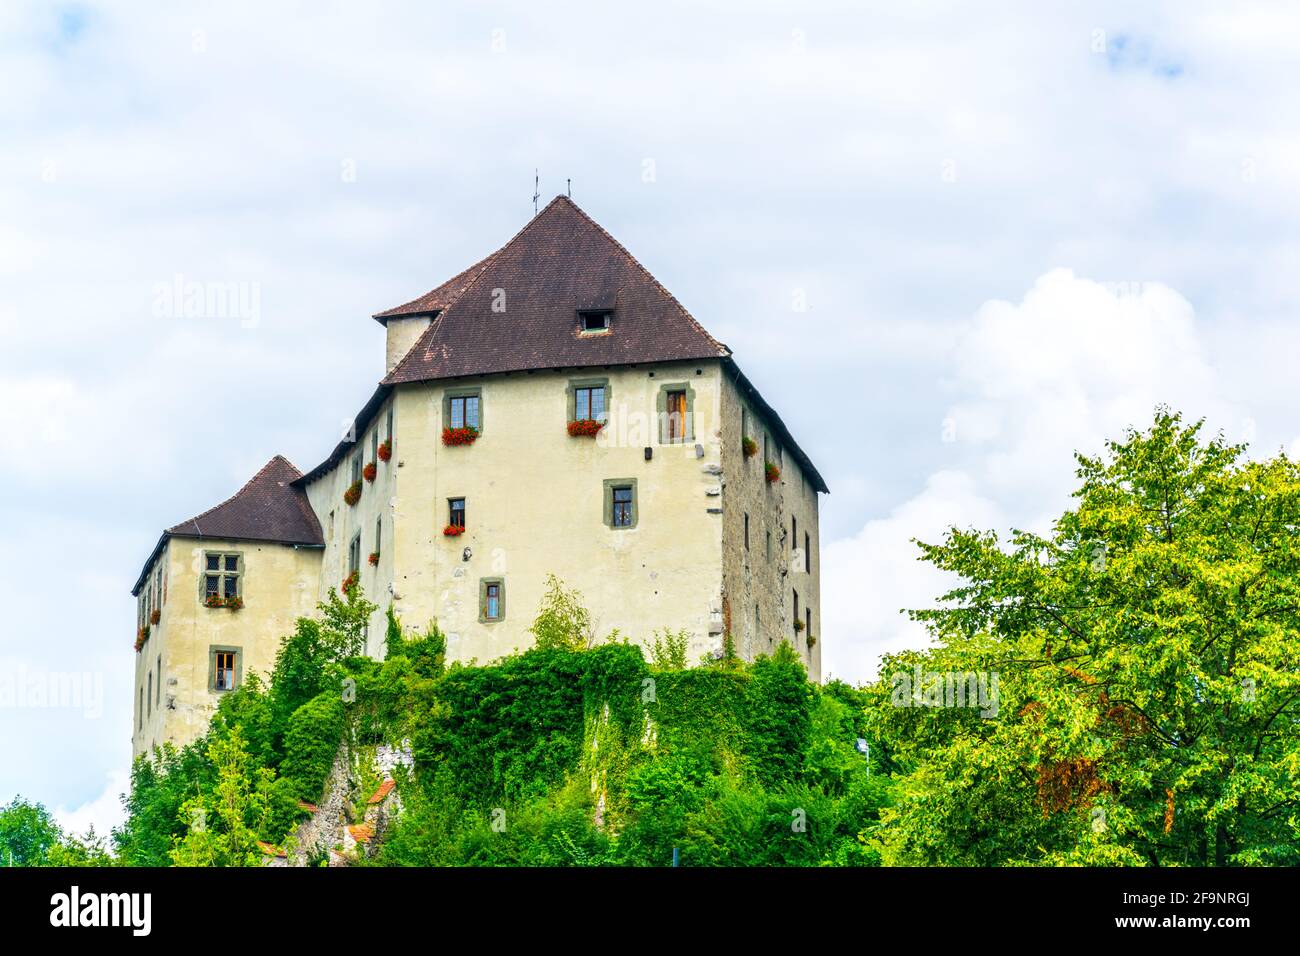 View of the schattenburg castle in Feldkirch, Austria. Stock Photo